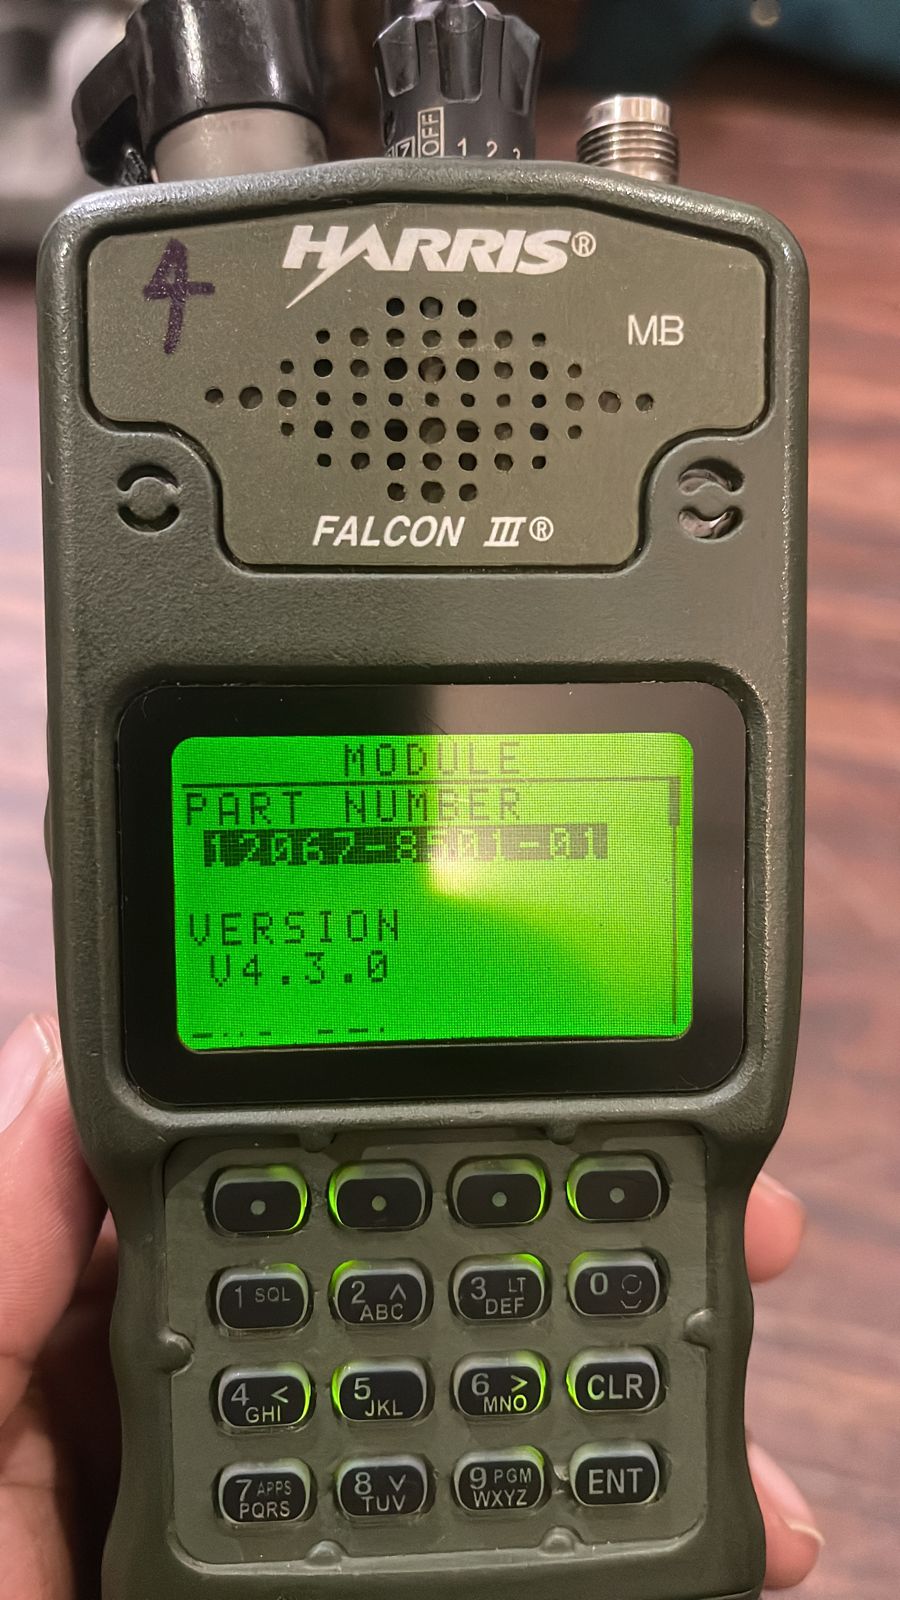 Harris RF 7850M Handheld Radio Surplus/Used Export Version Marked 4